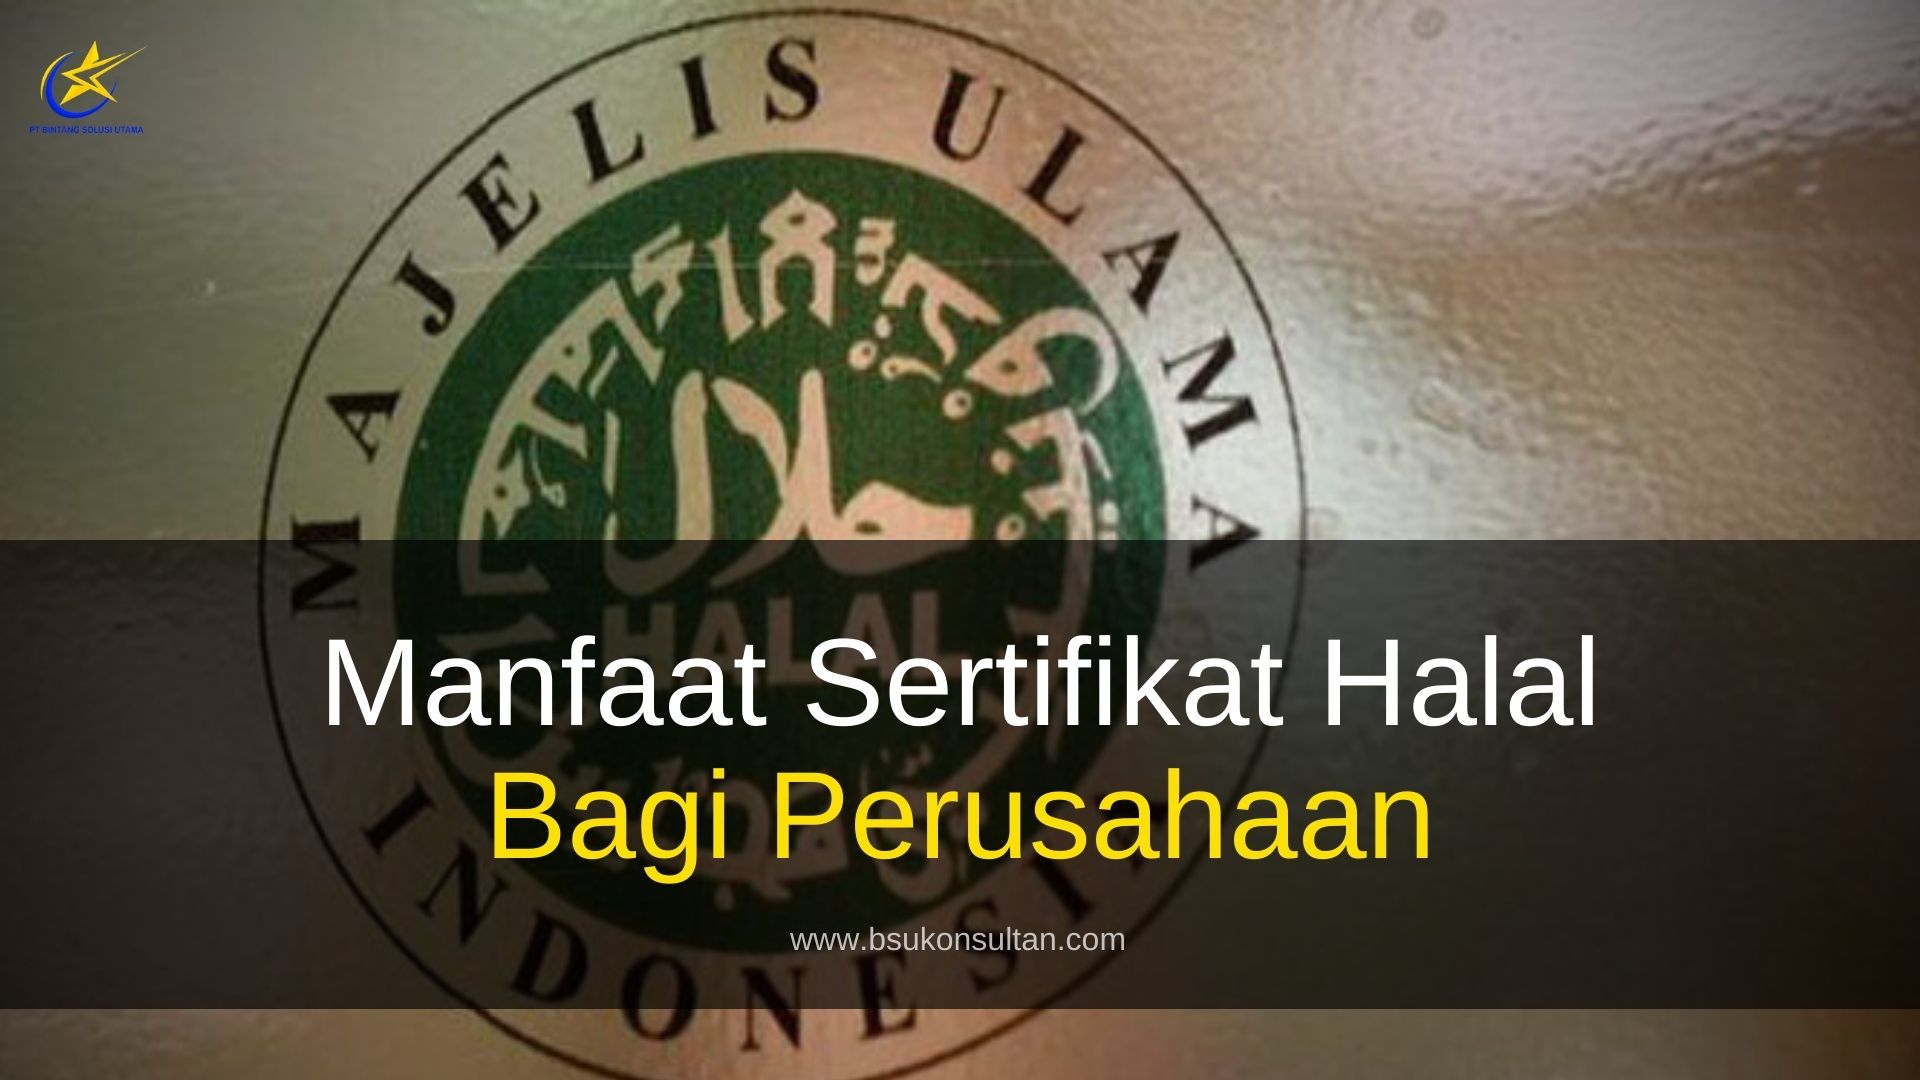 Jasa Pengurusan Sertifikat Halal MUI Surabaya: Cara Terbaik untuk Memperoleh Sertifikasi Halal yang Diakui Secara Internasional